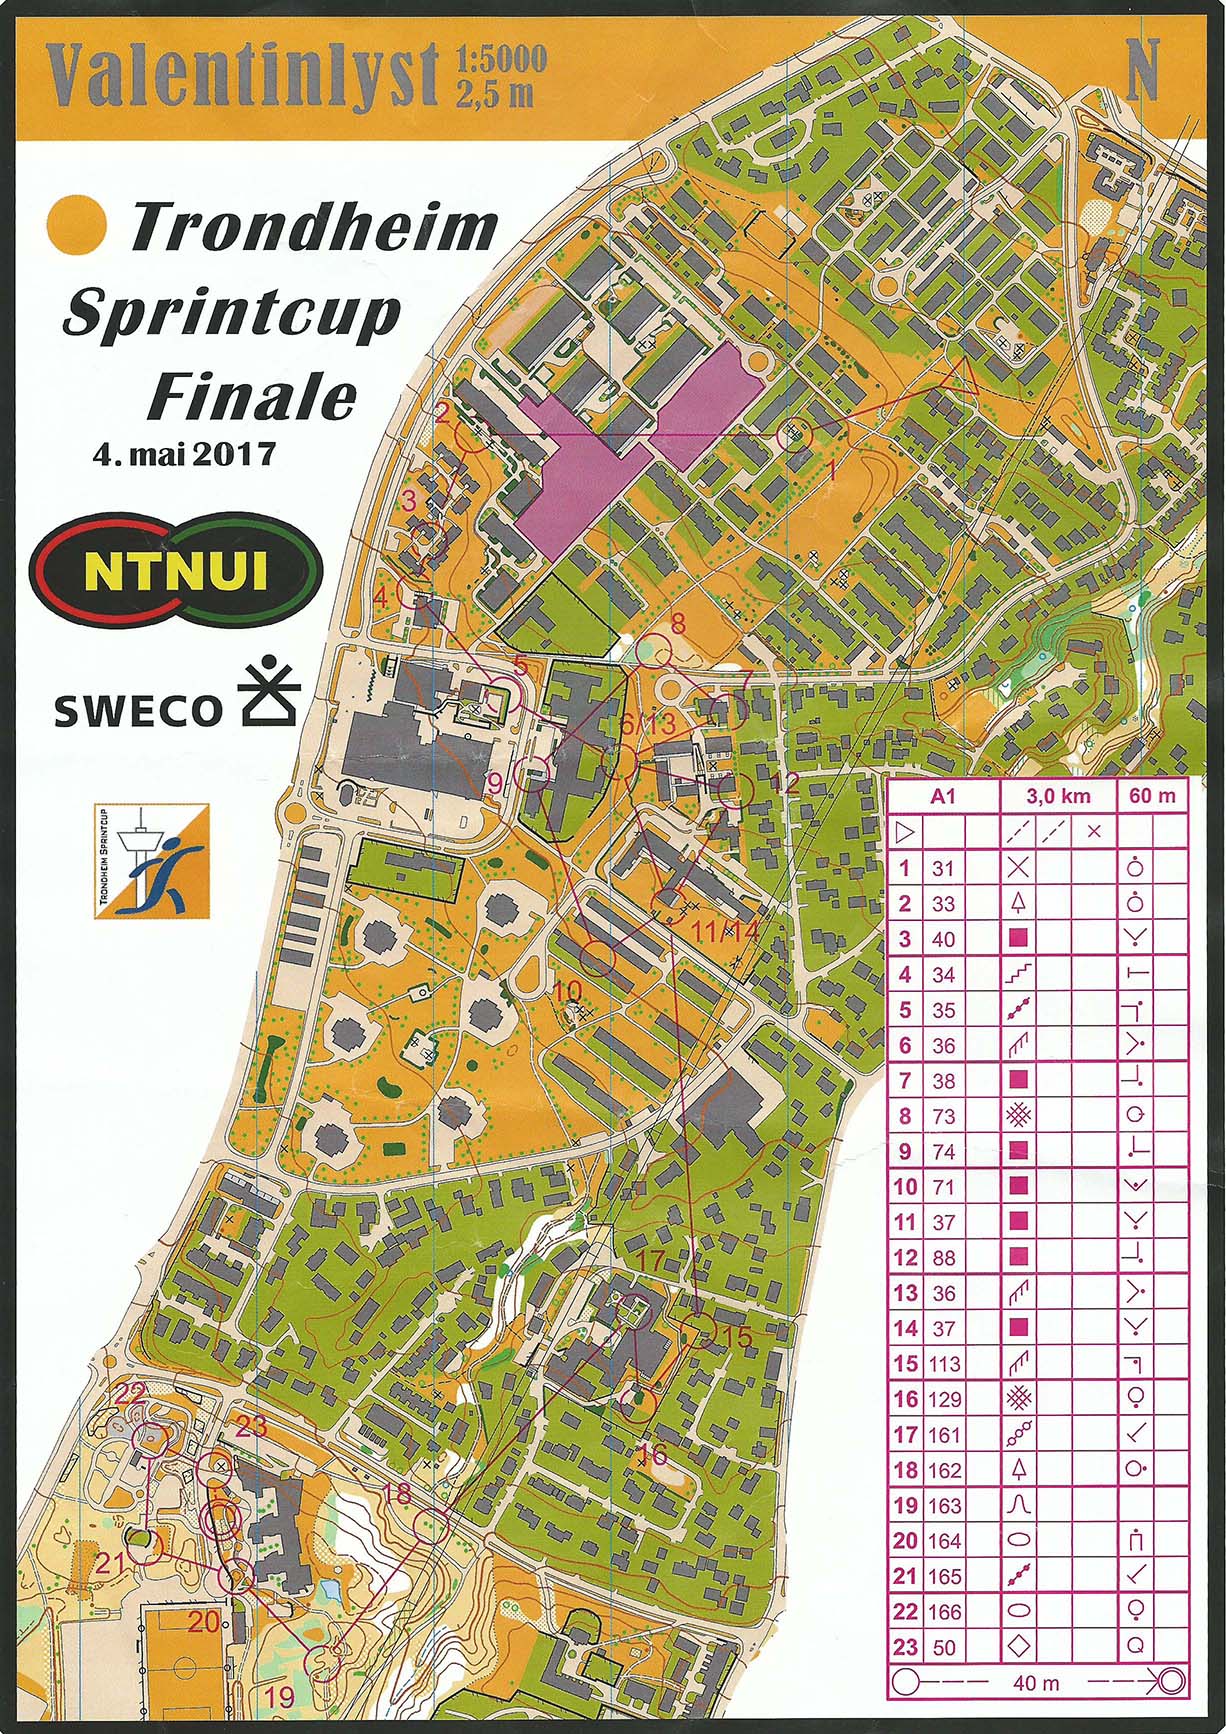 Trondheim Sprintcup Final (04-05-2017)